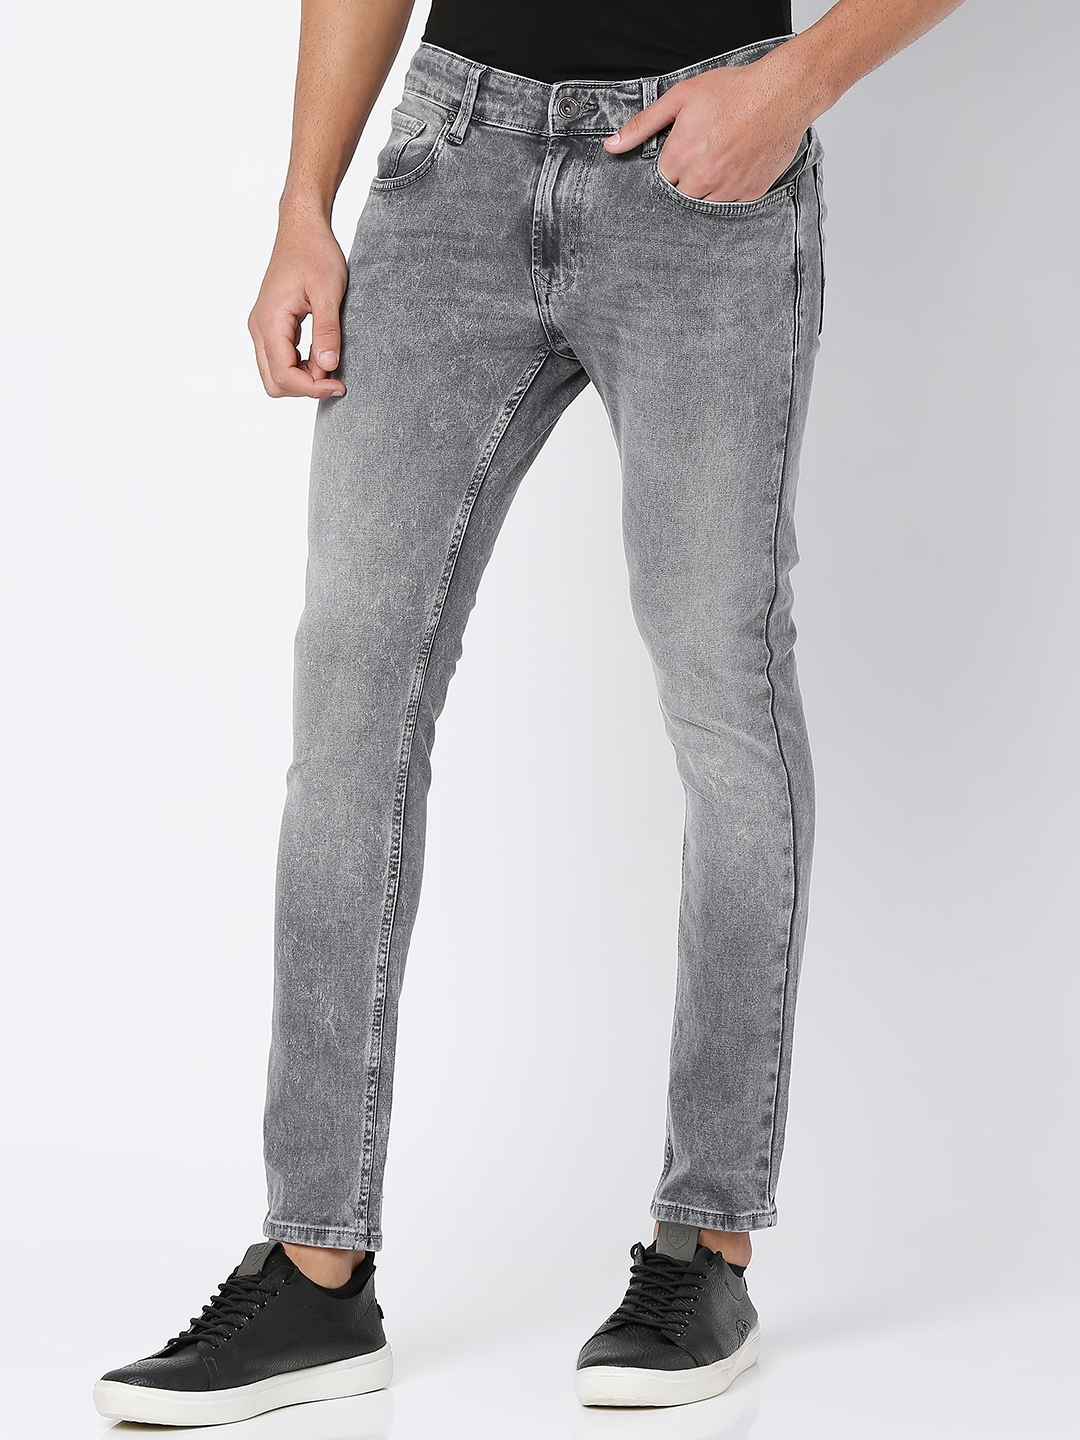 spykar | Men's Grey Cotton Solid Jeans 1